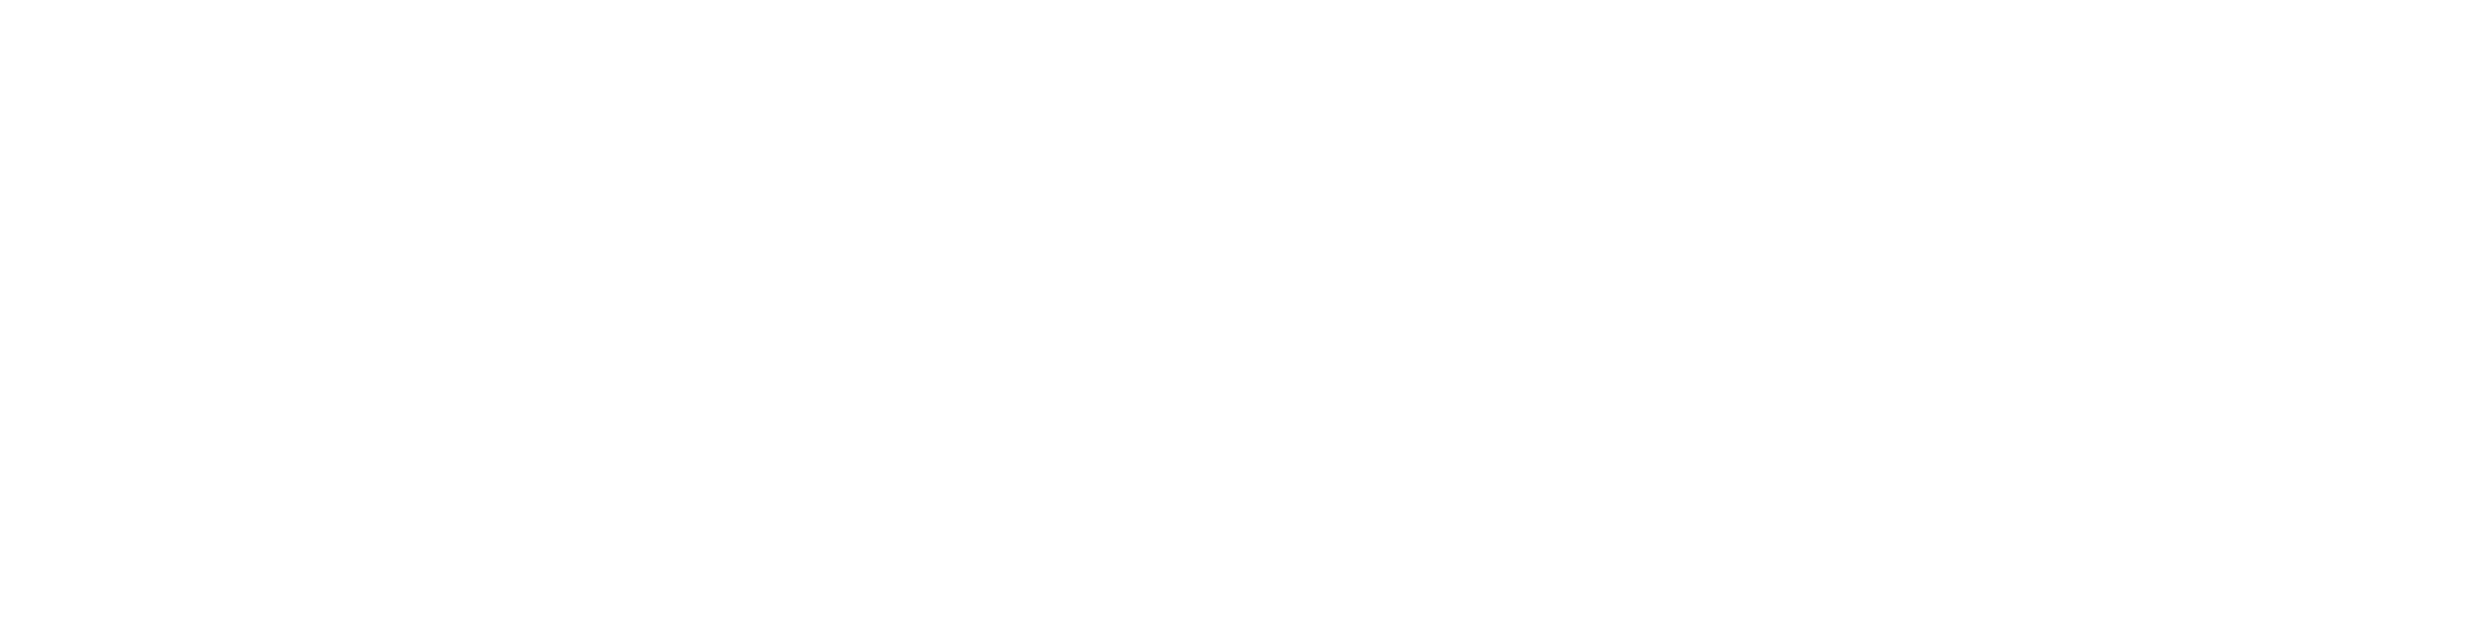 Colegio Diocesano Espiritu Santo